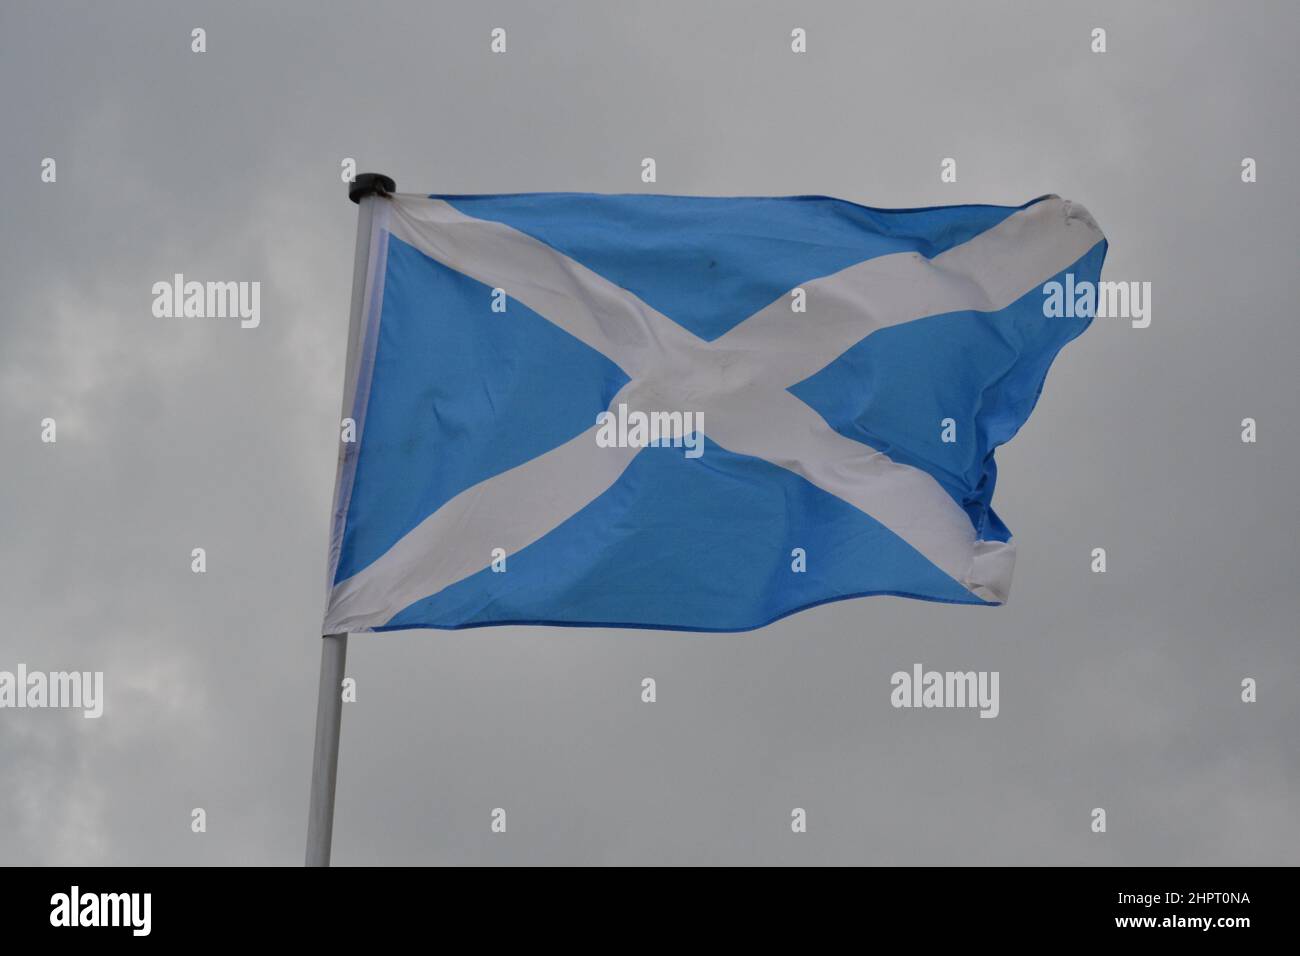 Scotland National Flag Flying - Blue And White Flag - Windy Overcast Day - Yorkshire - UK Stock Photo